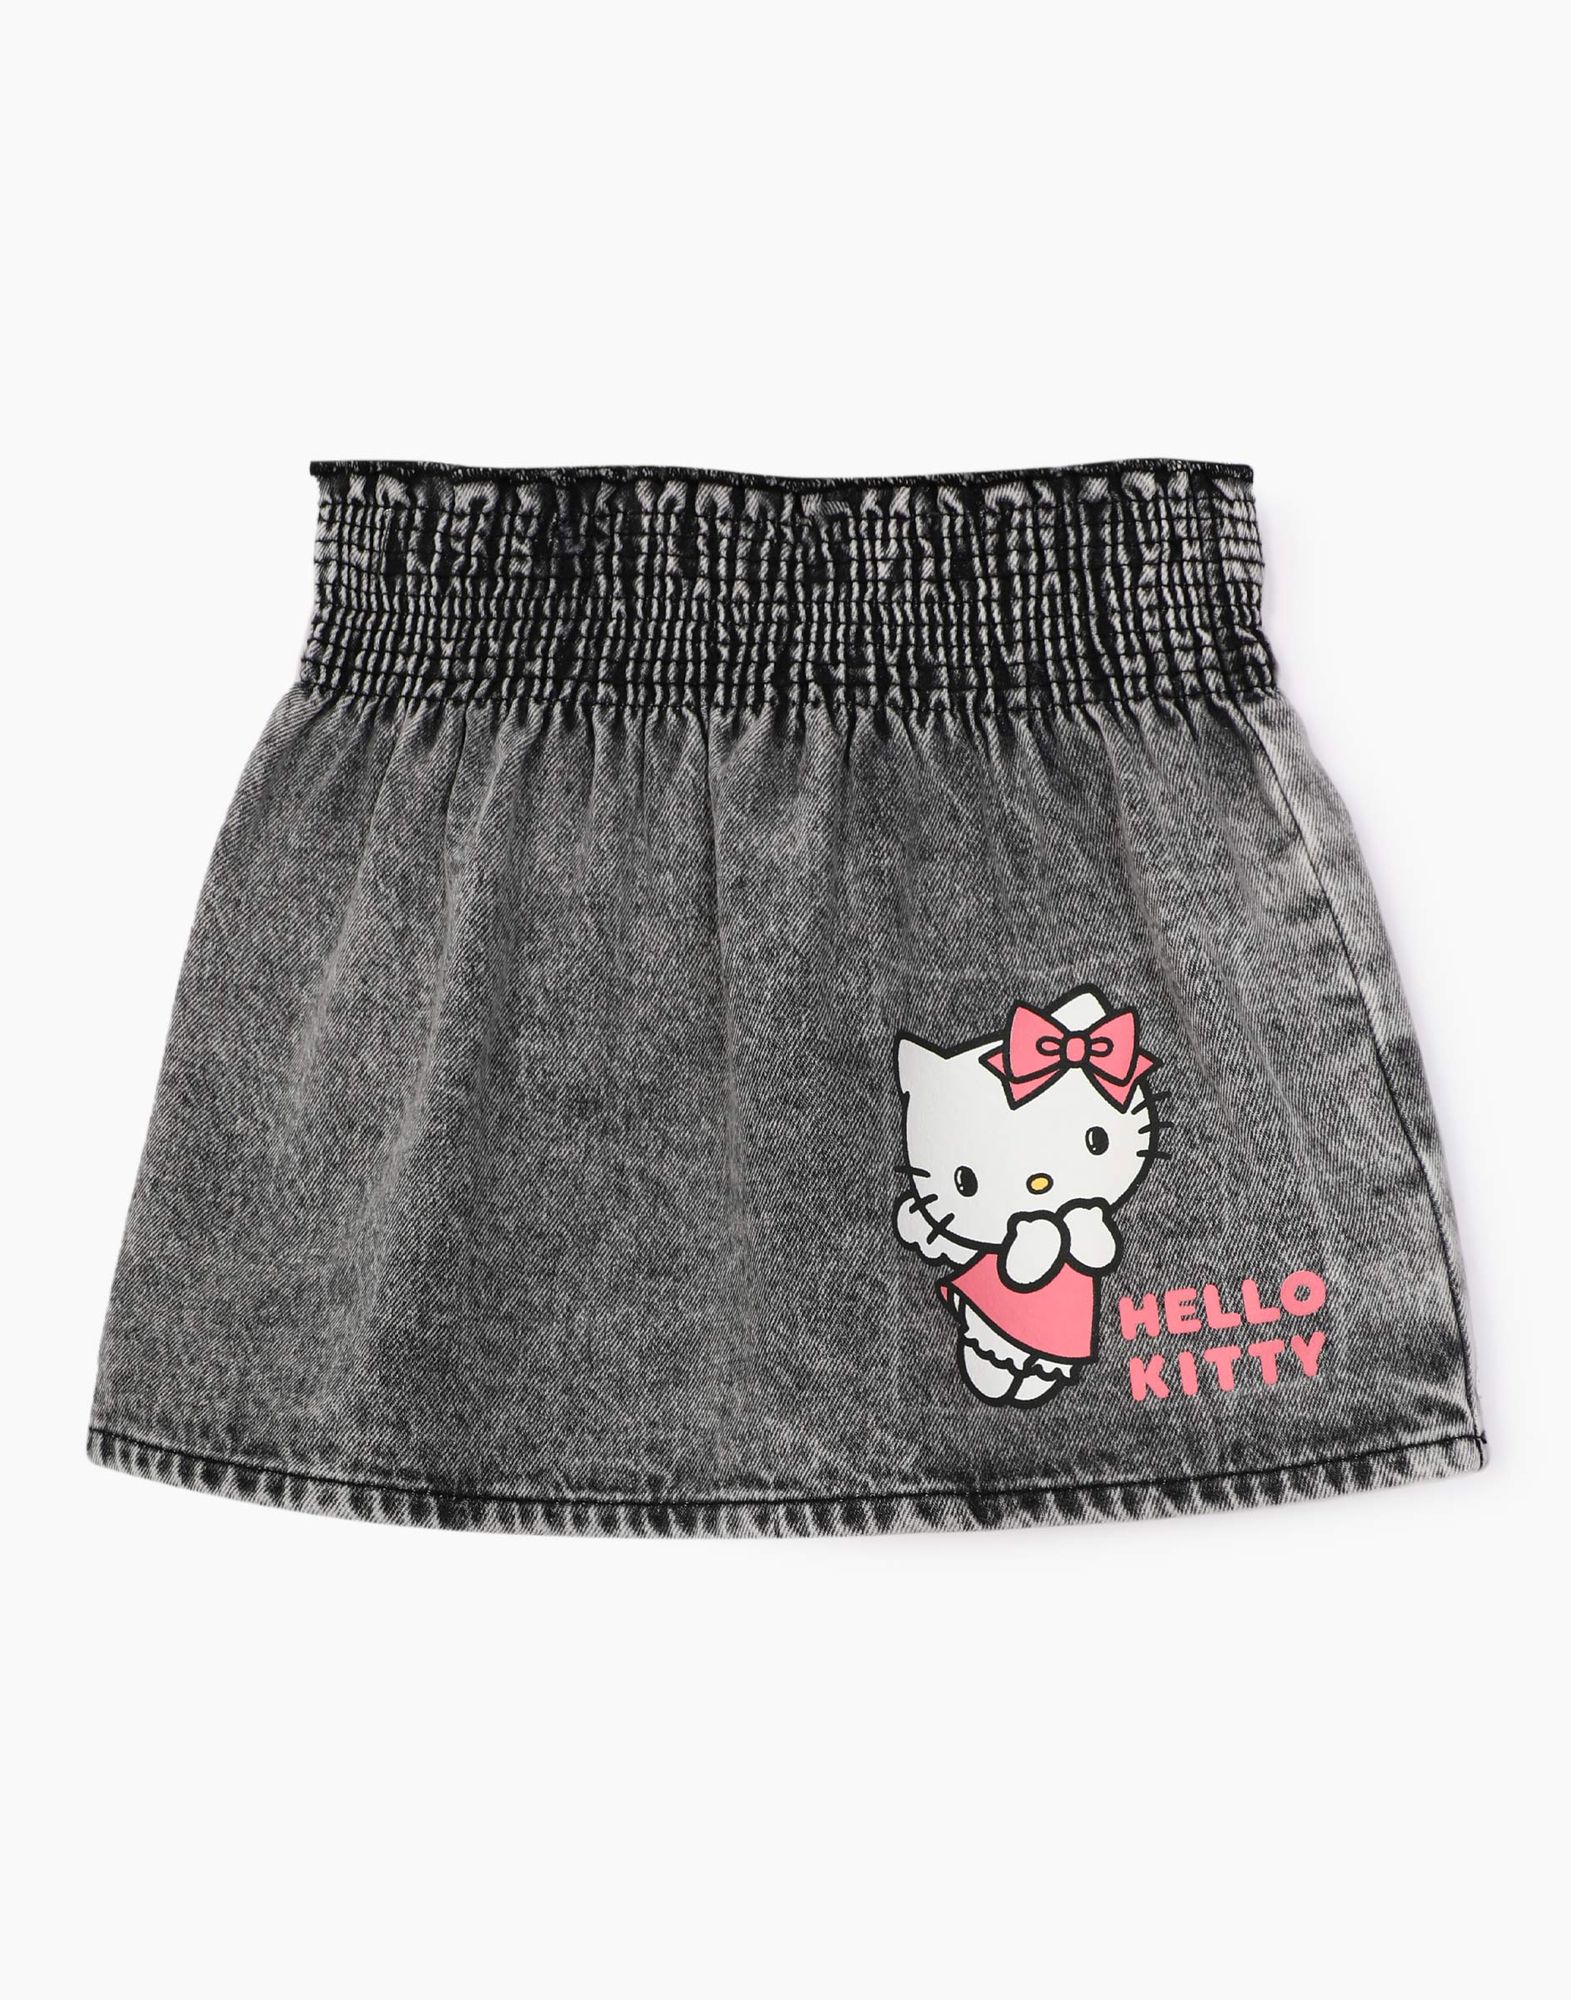 Серая юбка из коллекции Hello Kitty для девочки-1